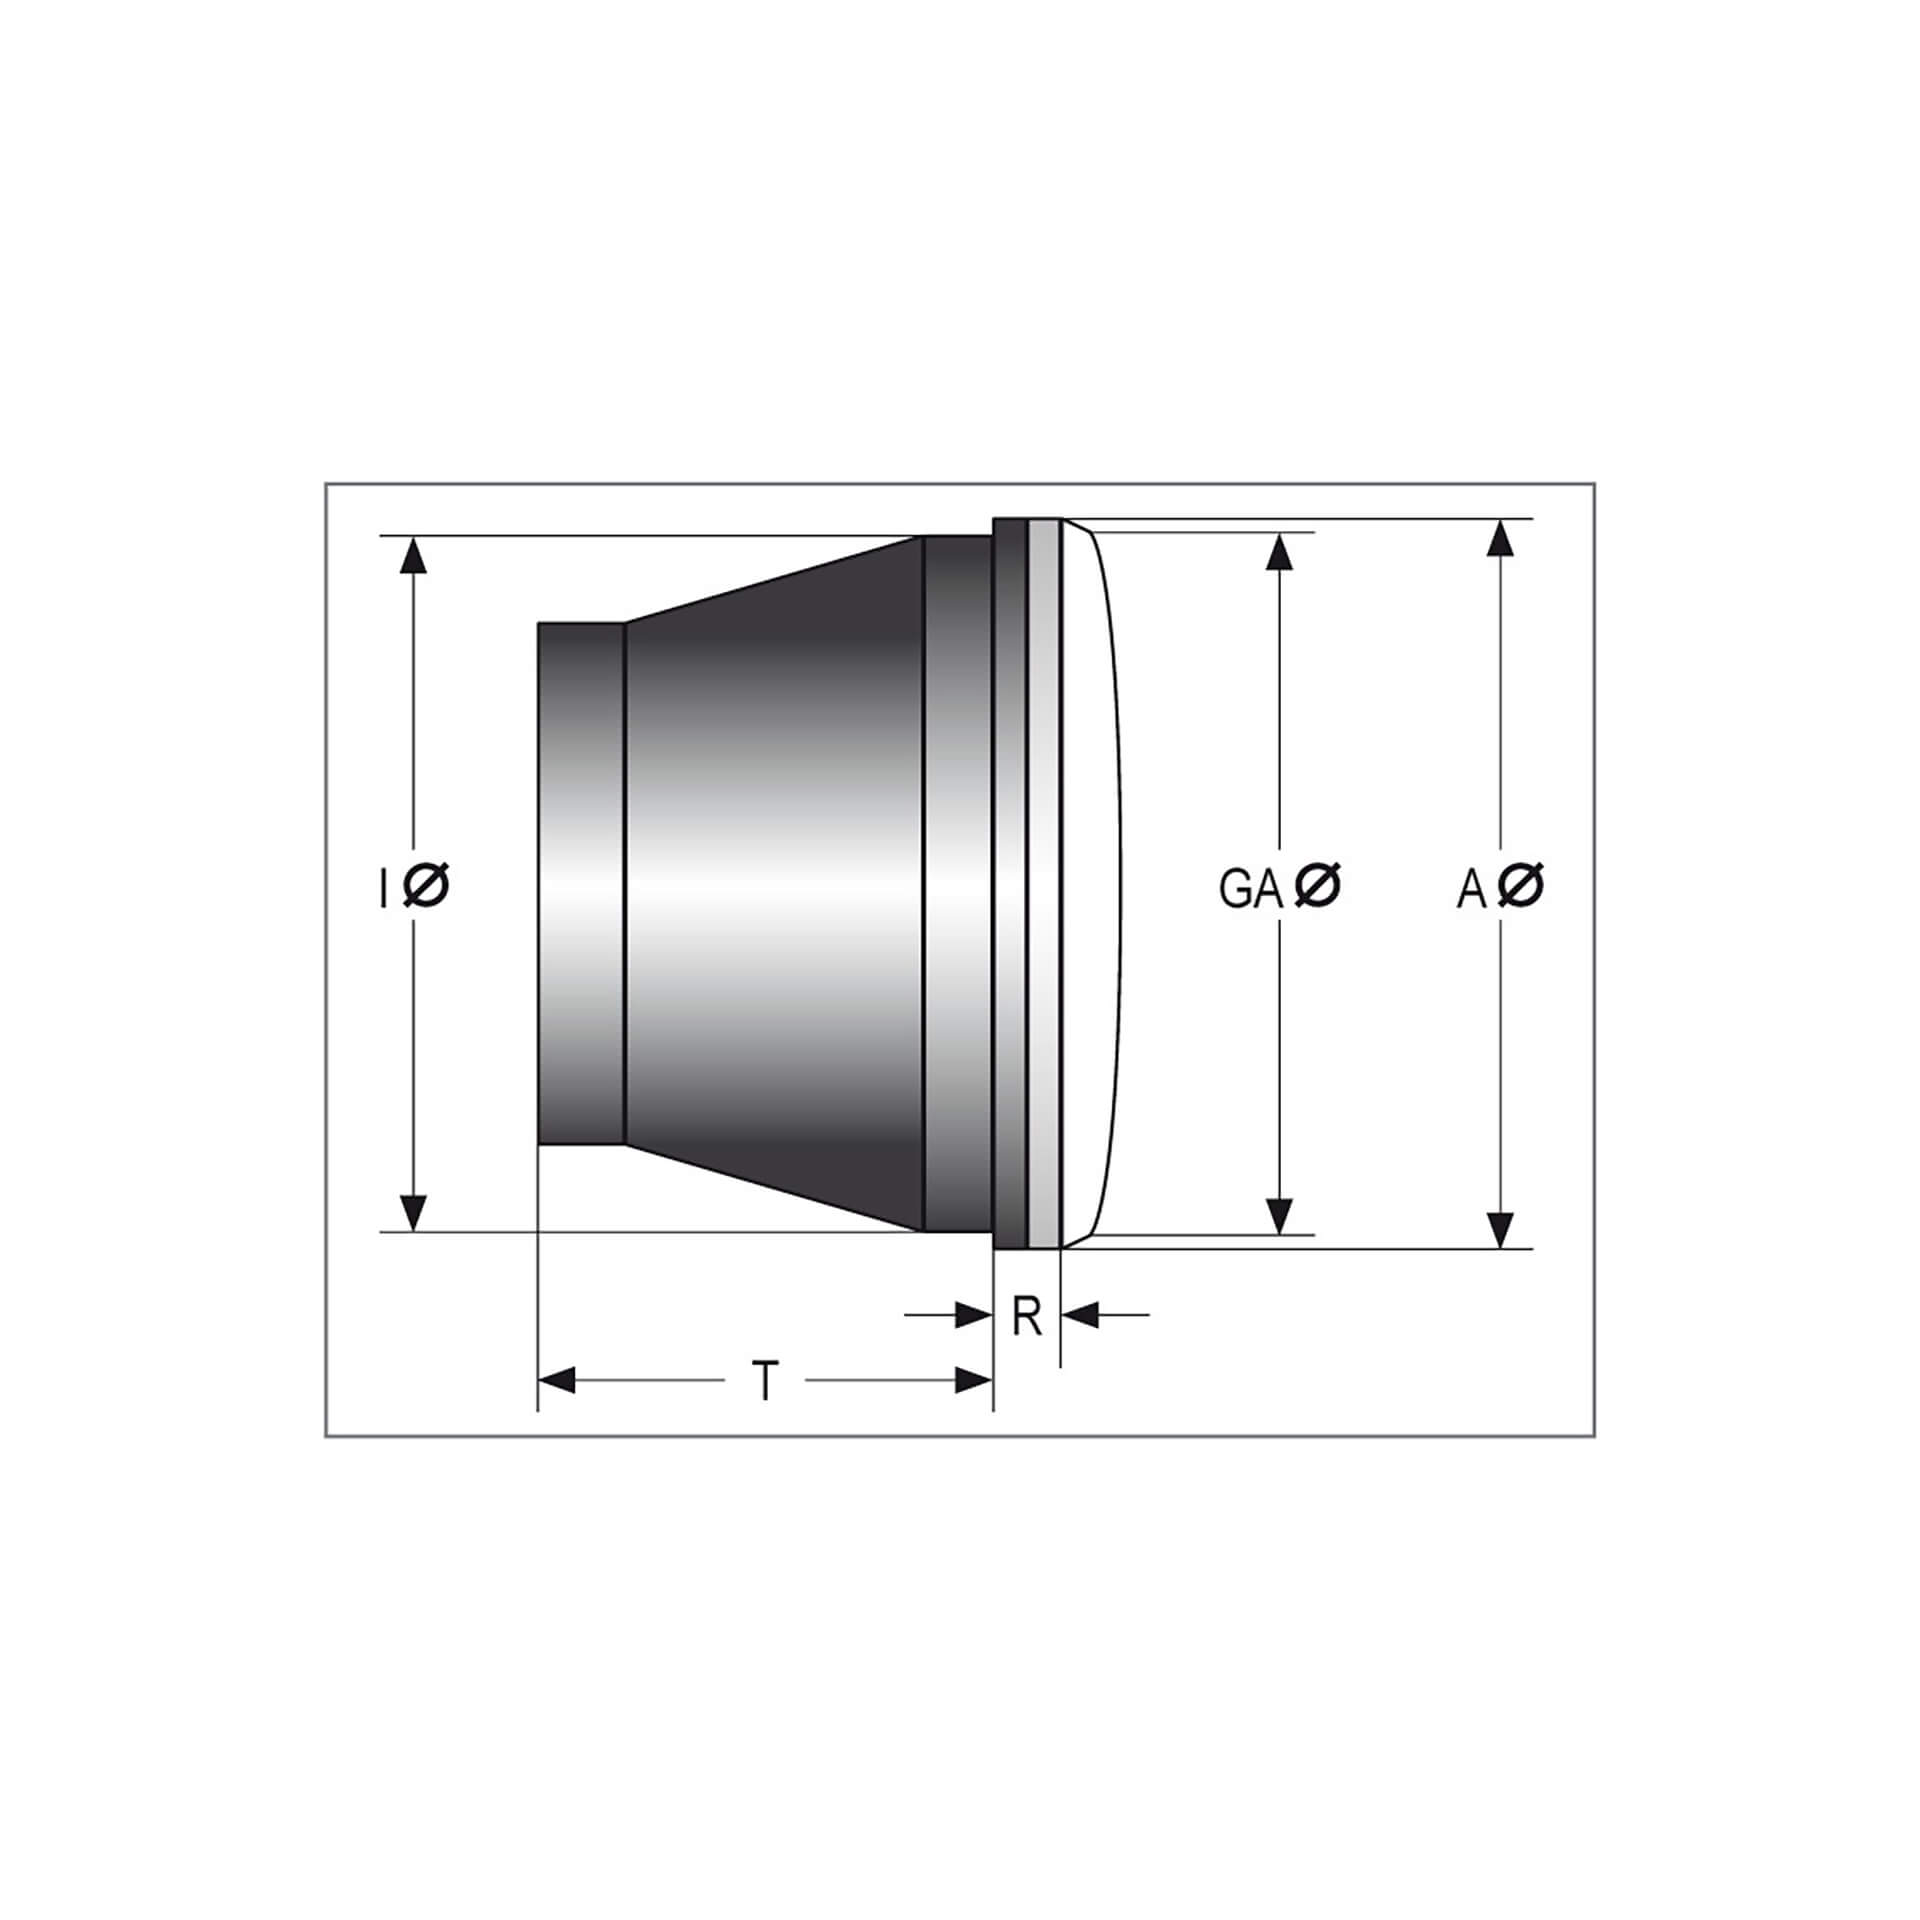 shin_yo Main headlight insert 6 1/2 inch, 1x clear lens and 1x prismatic reflector each